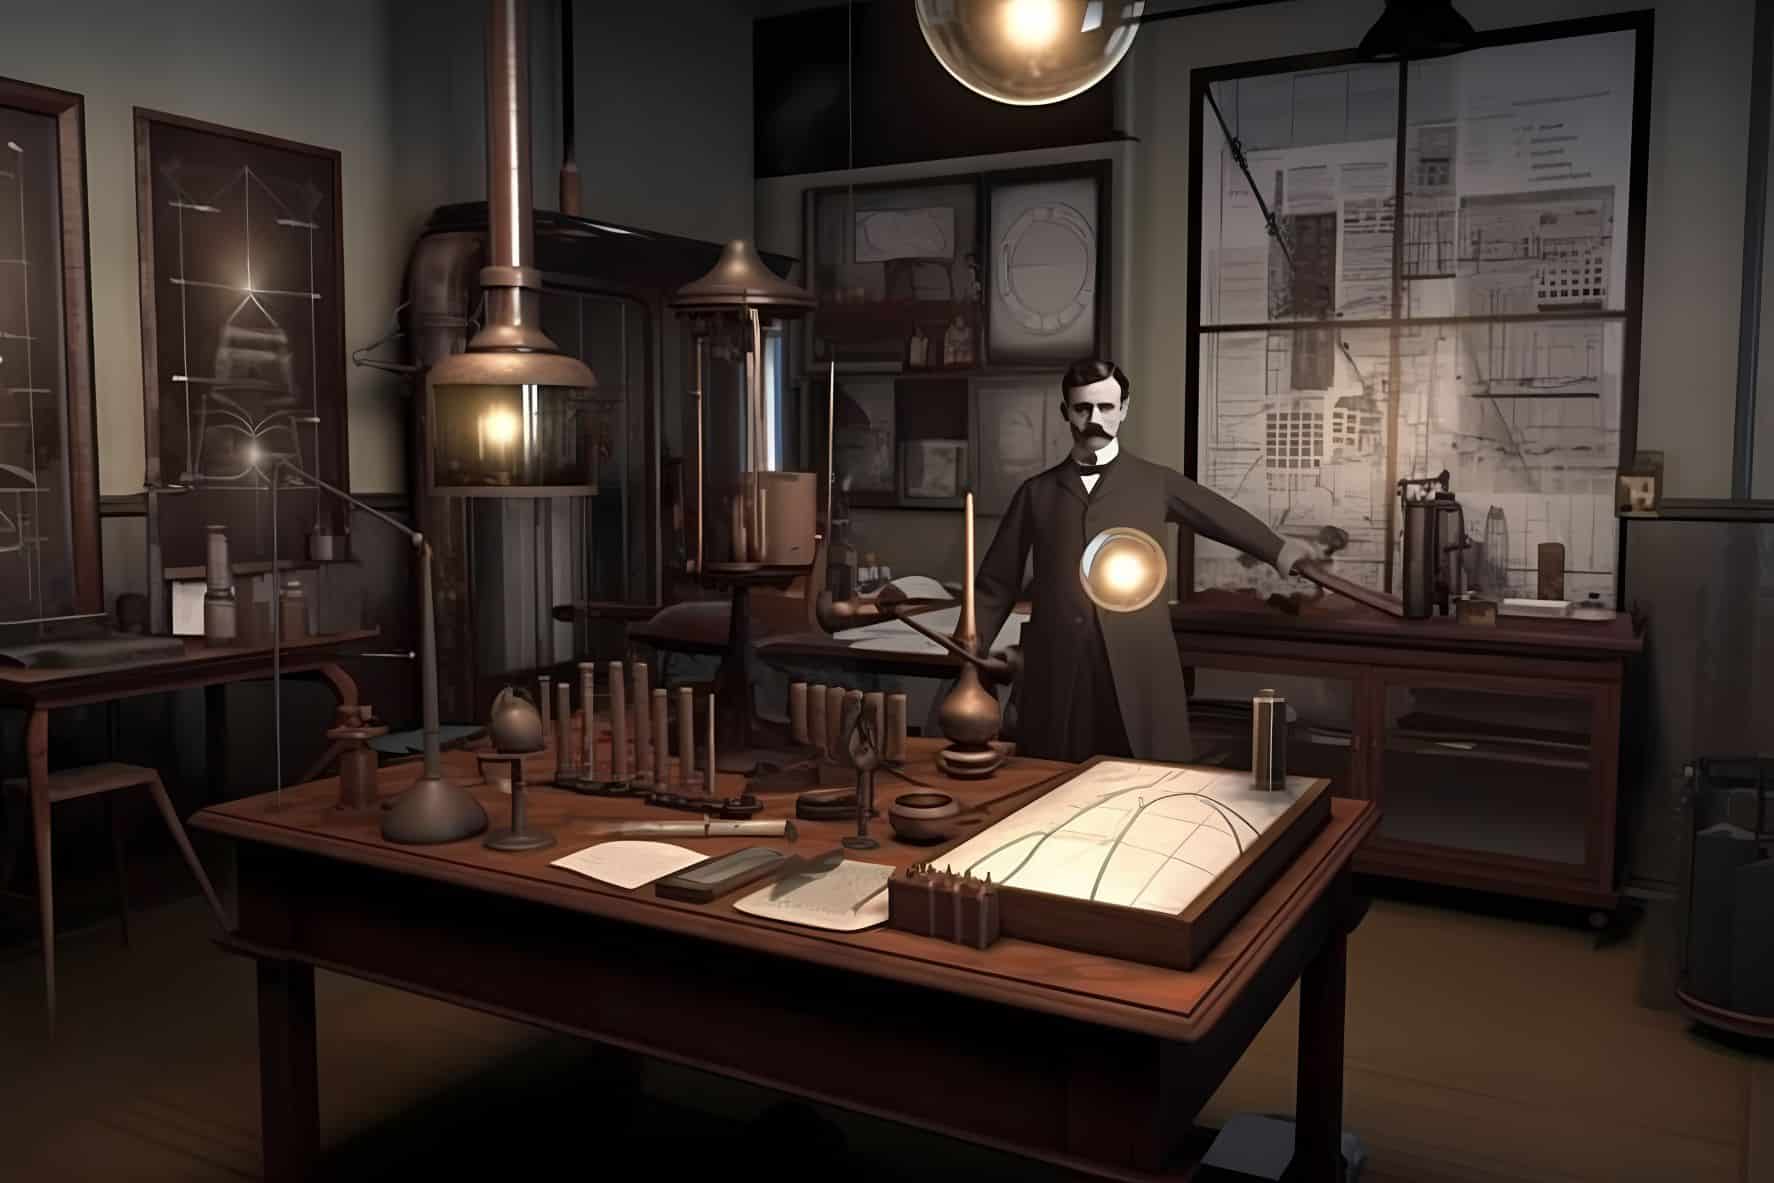 Nikolai Tesla did his best work alone in the laboratory